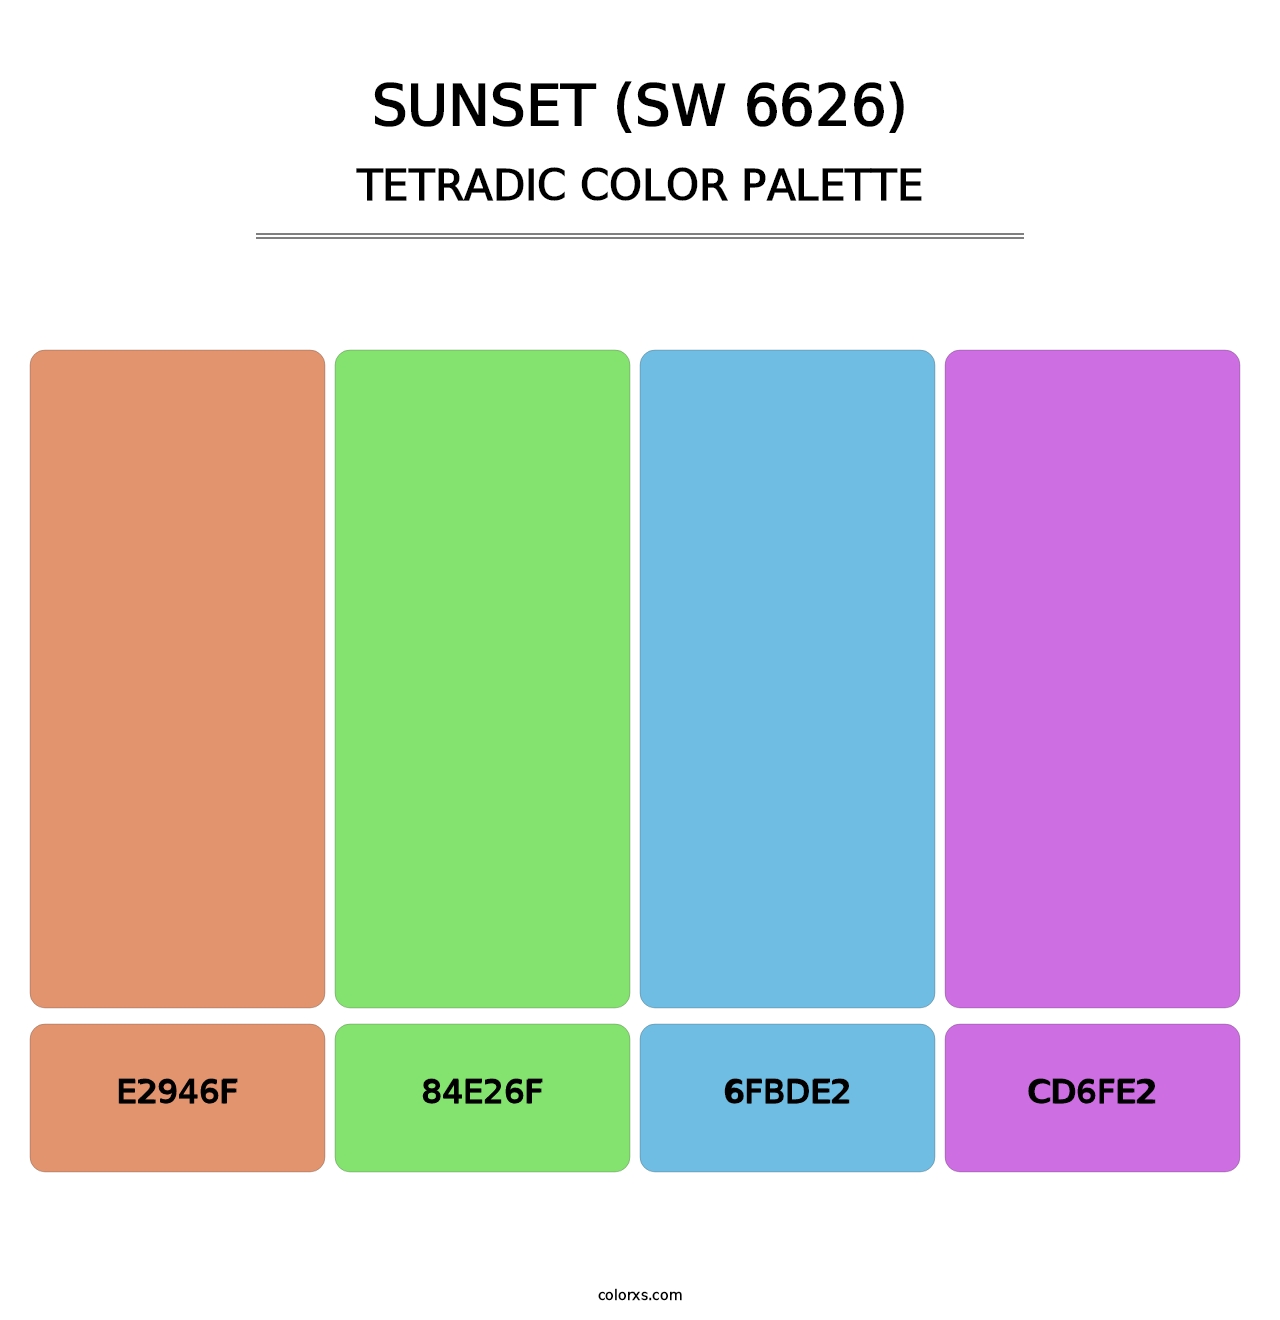 Sunset (SW 6626) - Tetradic Color Palette